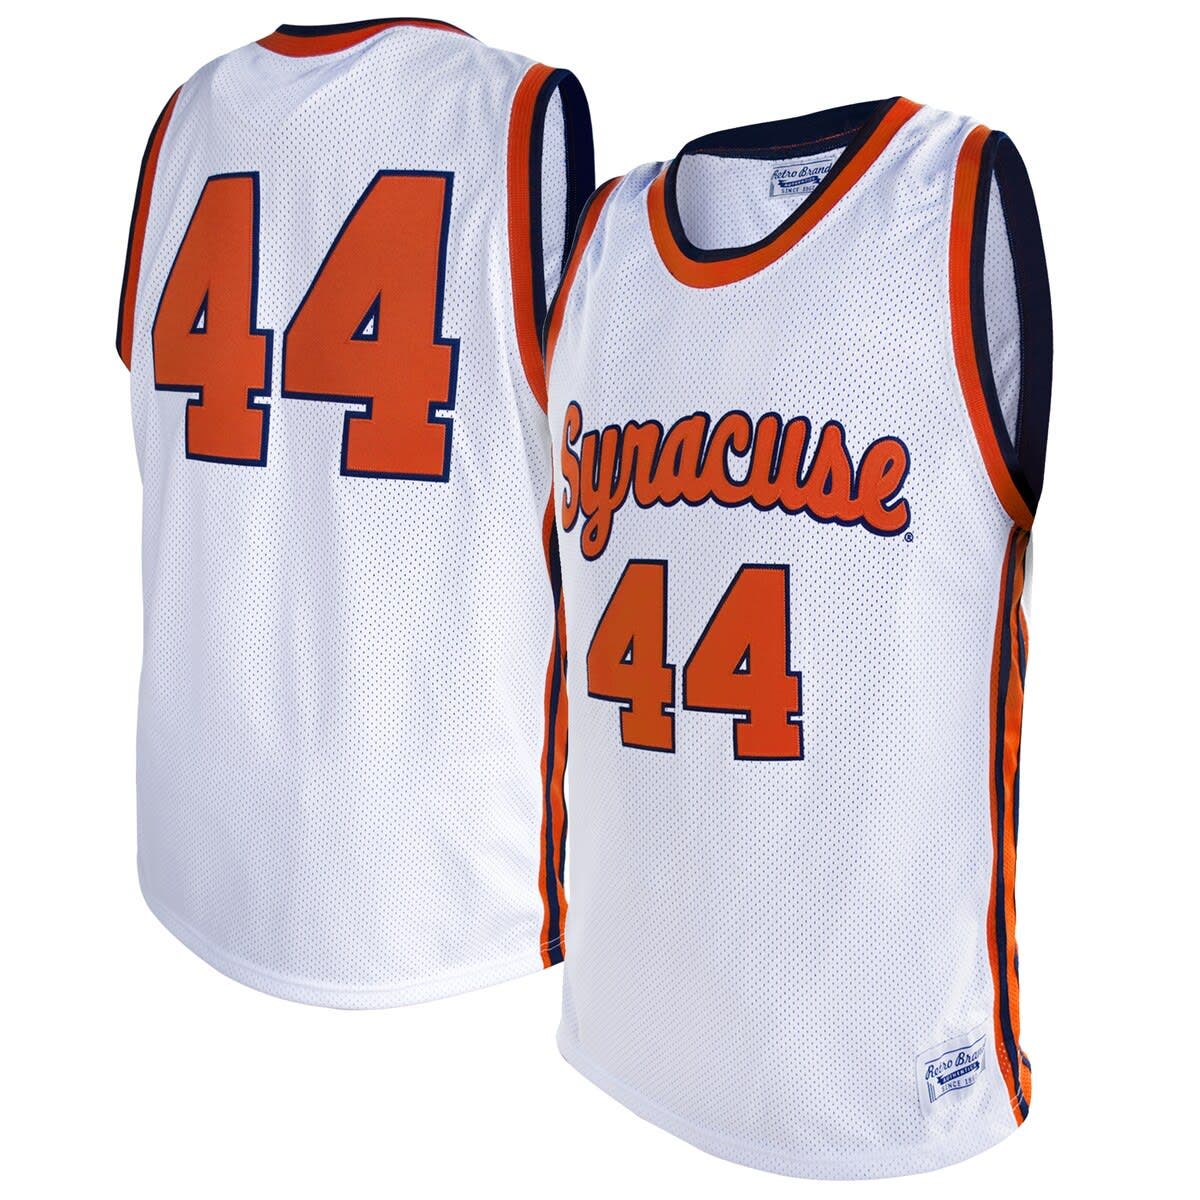 Syracuse Orange retro jersey